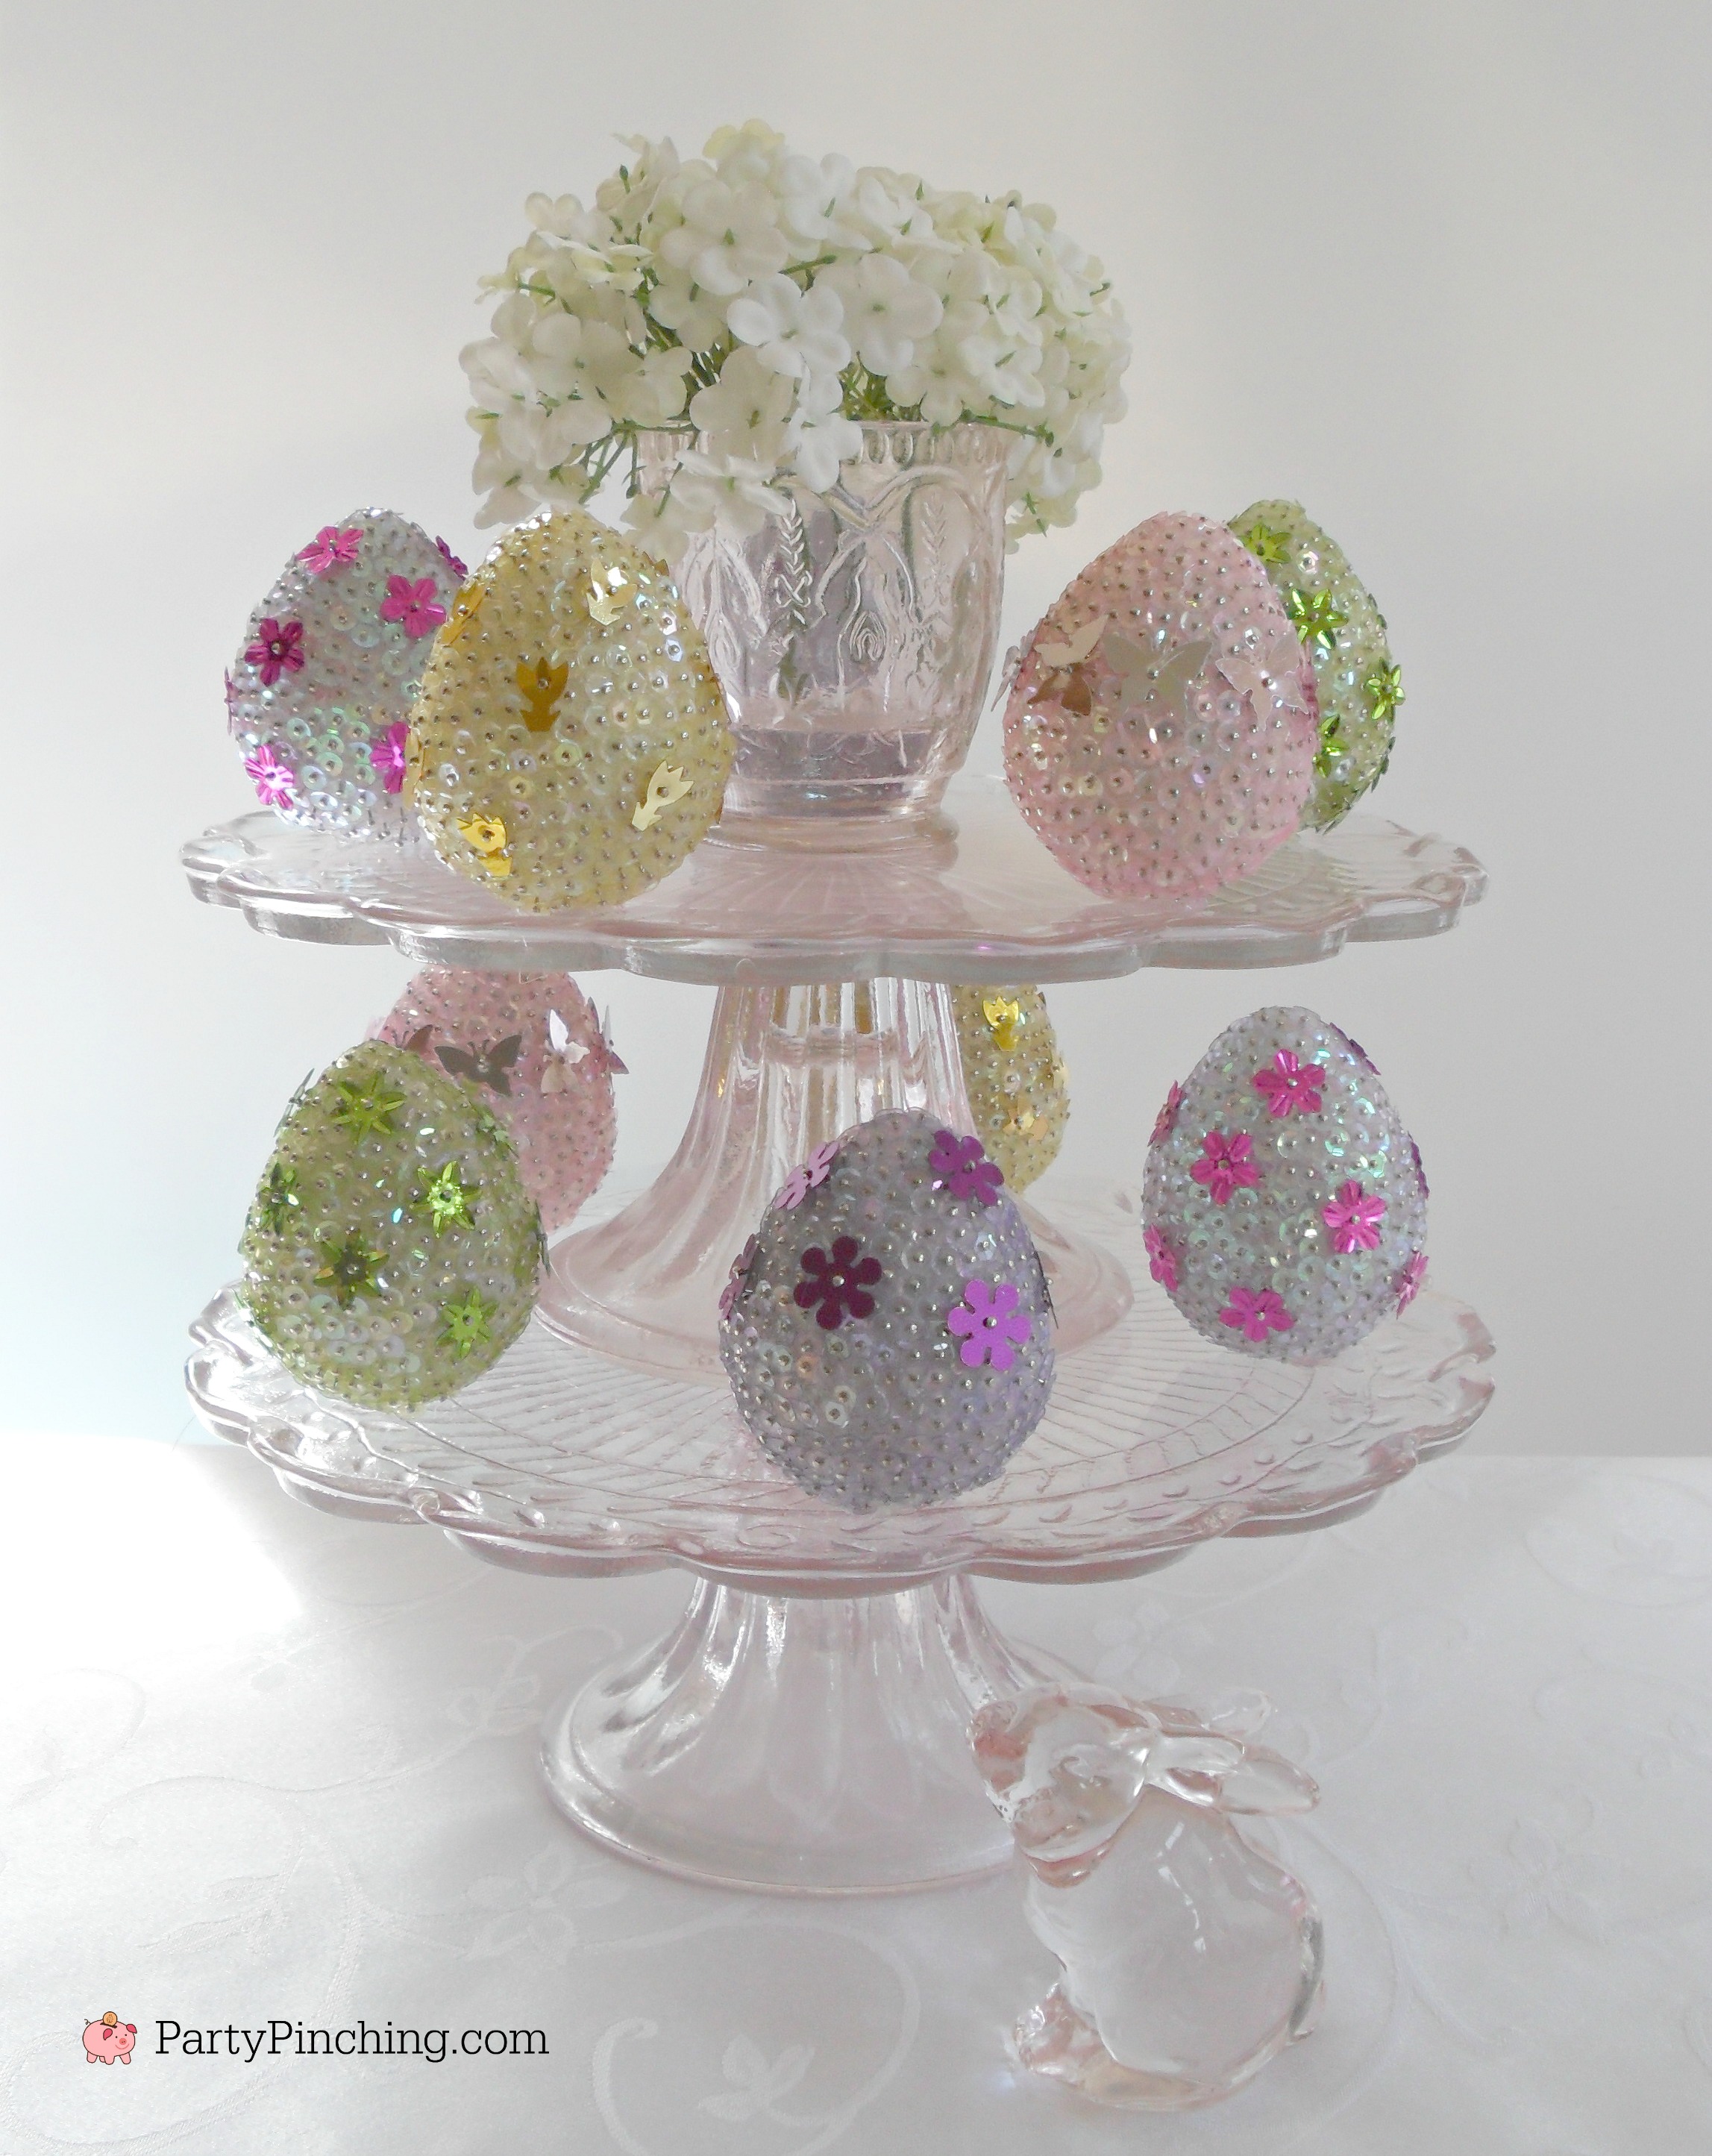 sequin egg craft, easy DIY Easter egg craft, cute Easter egg idea, beautiful pretty gorgeous Easter egg decor